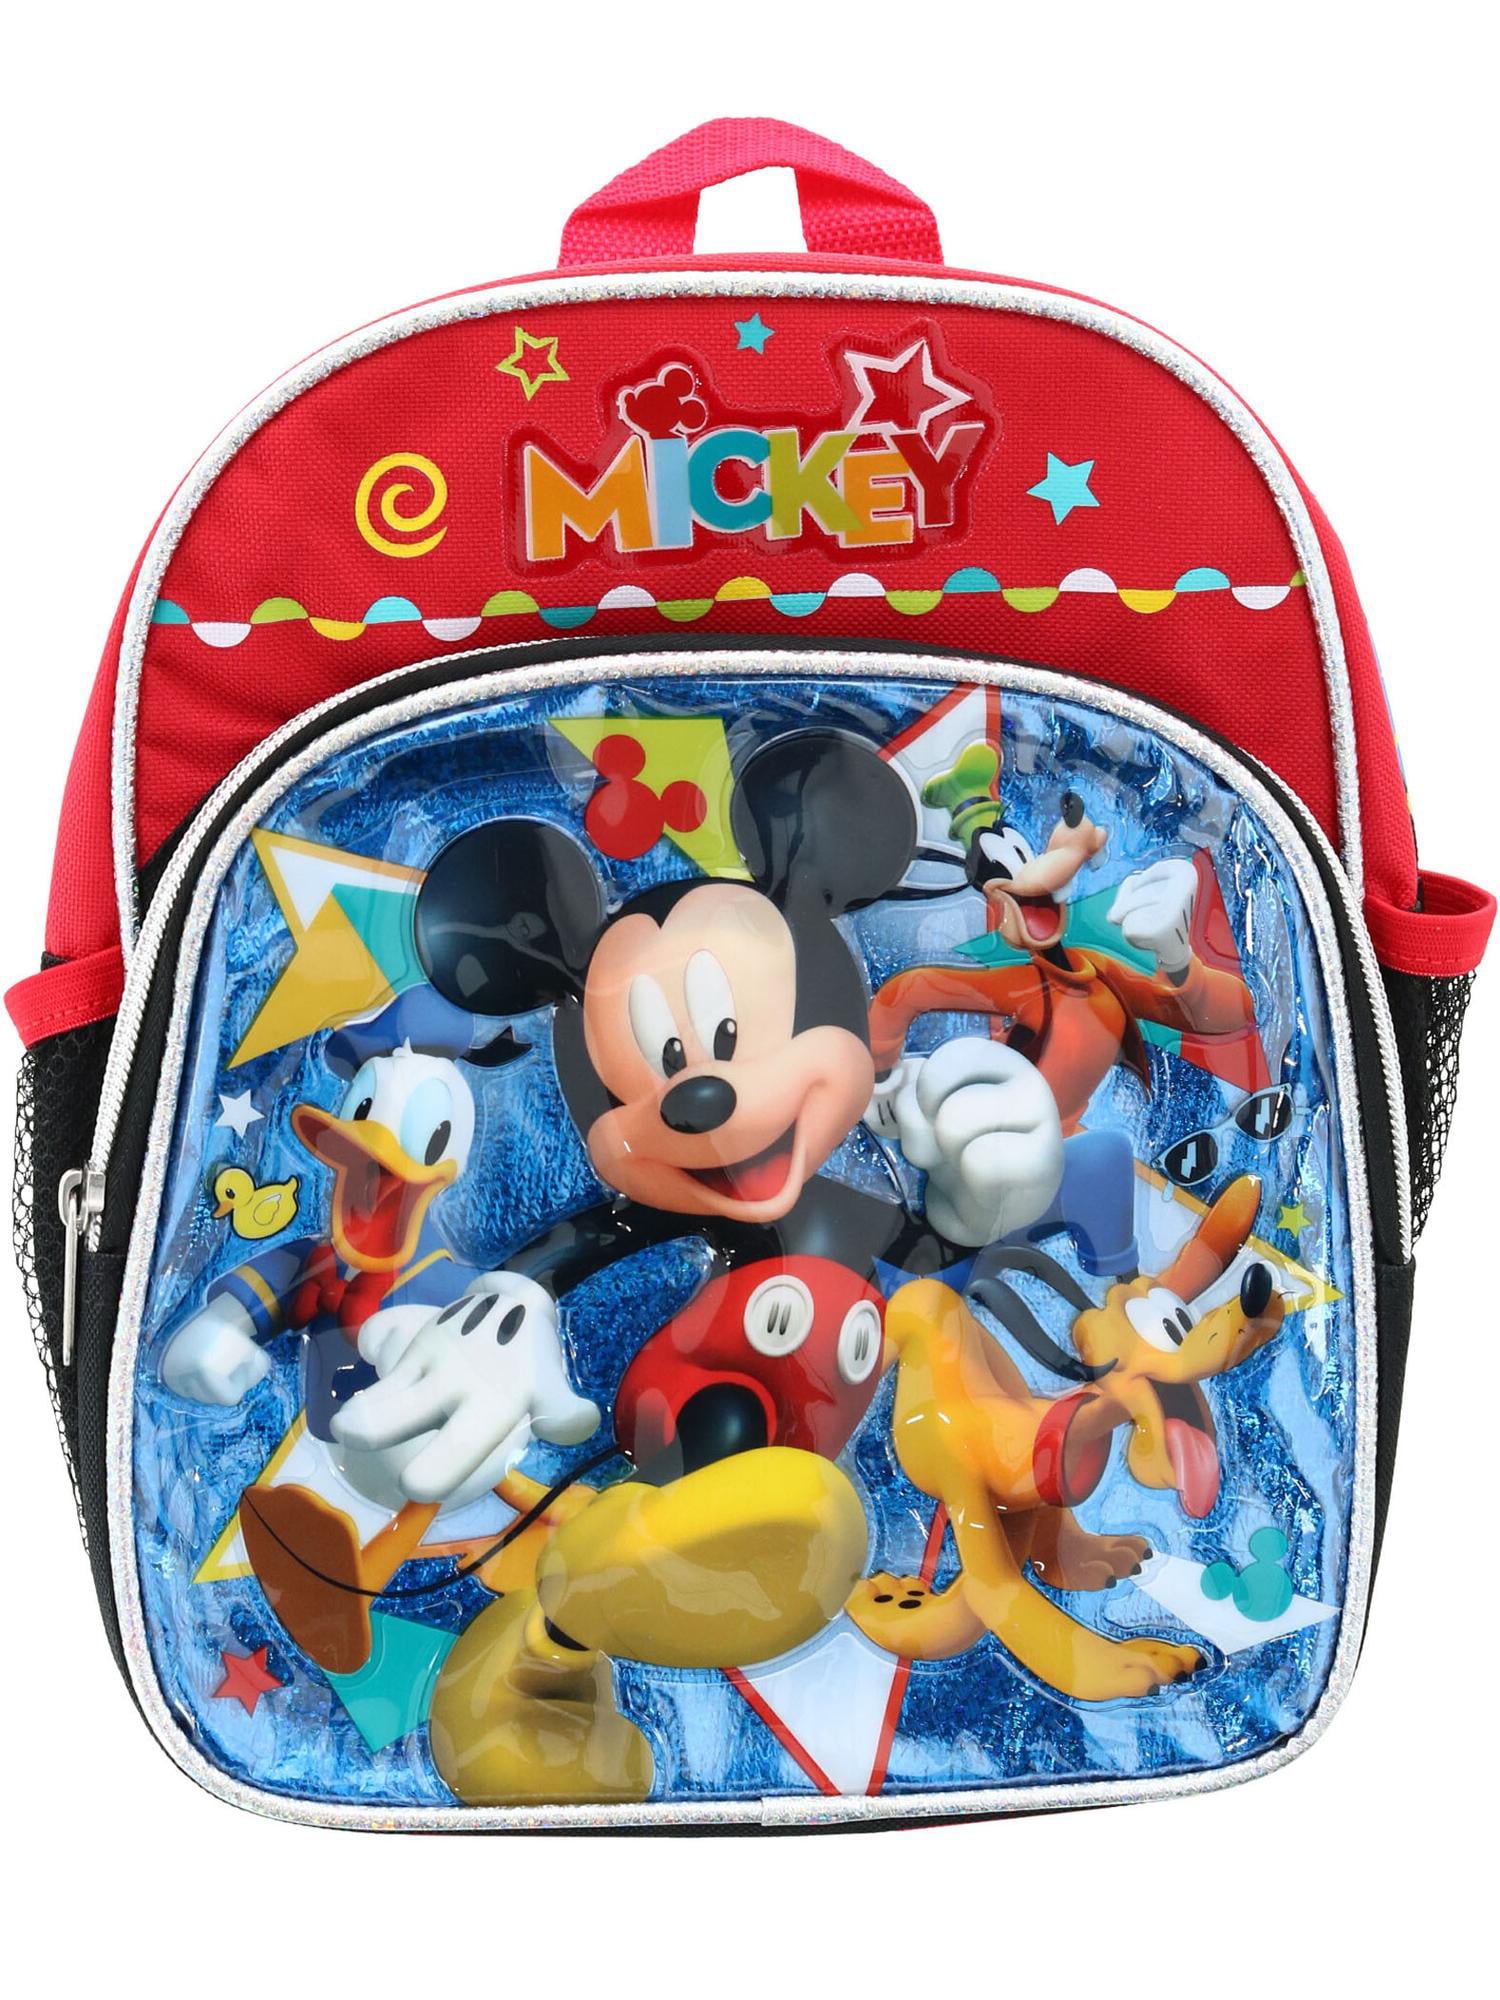 Mickey Mouse Blue Backpack Official Rucksack Disney Bag Lunch Bag Set School 